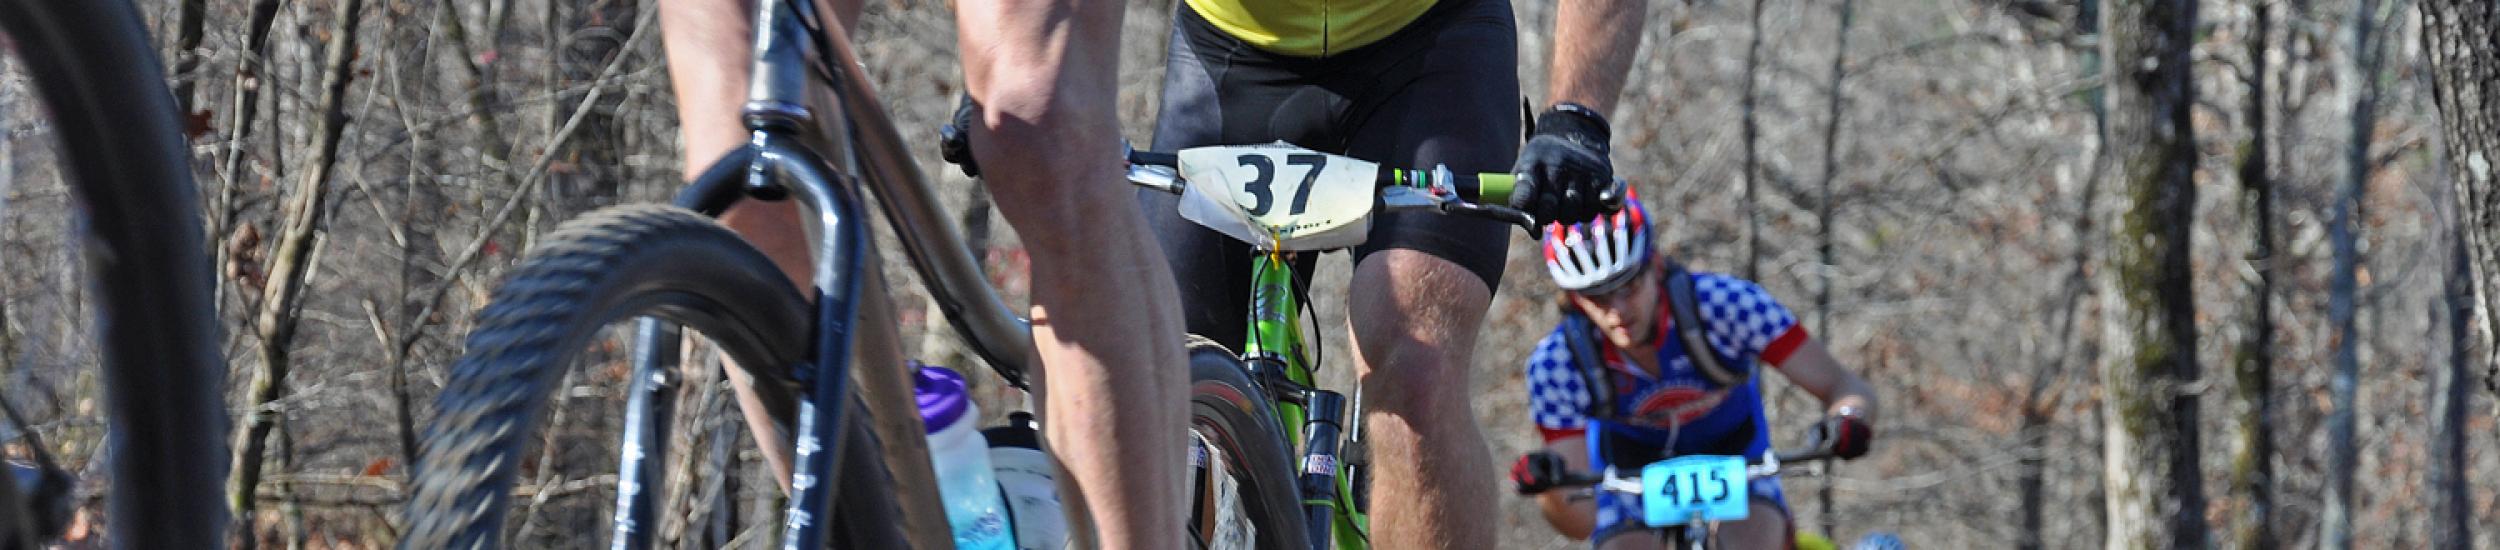 News: Valbrevenna, dove le aquile osano in mountain-bike